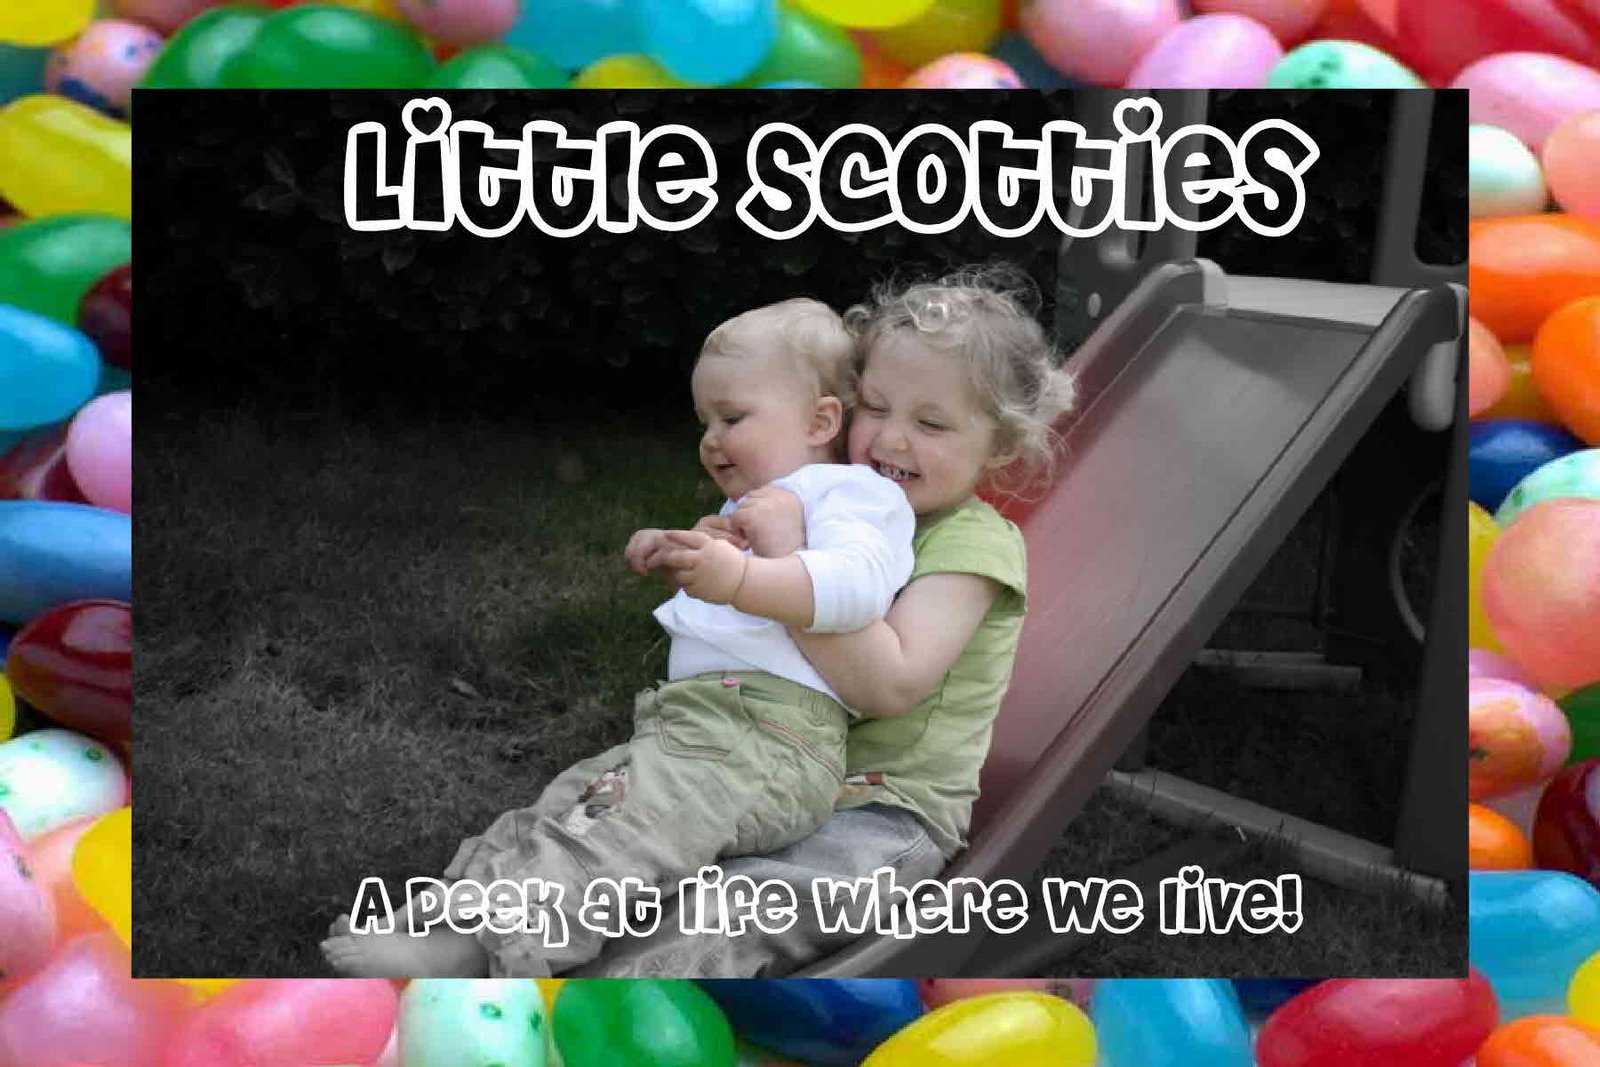 Little Scotties